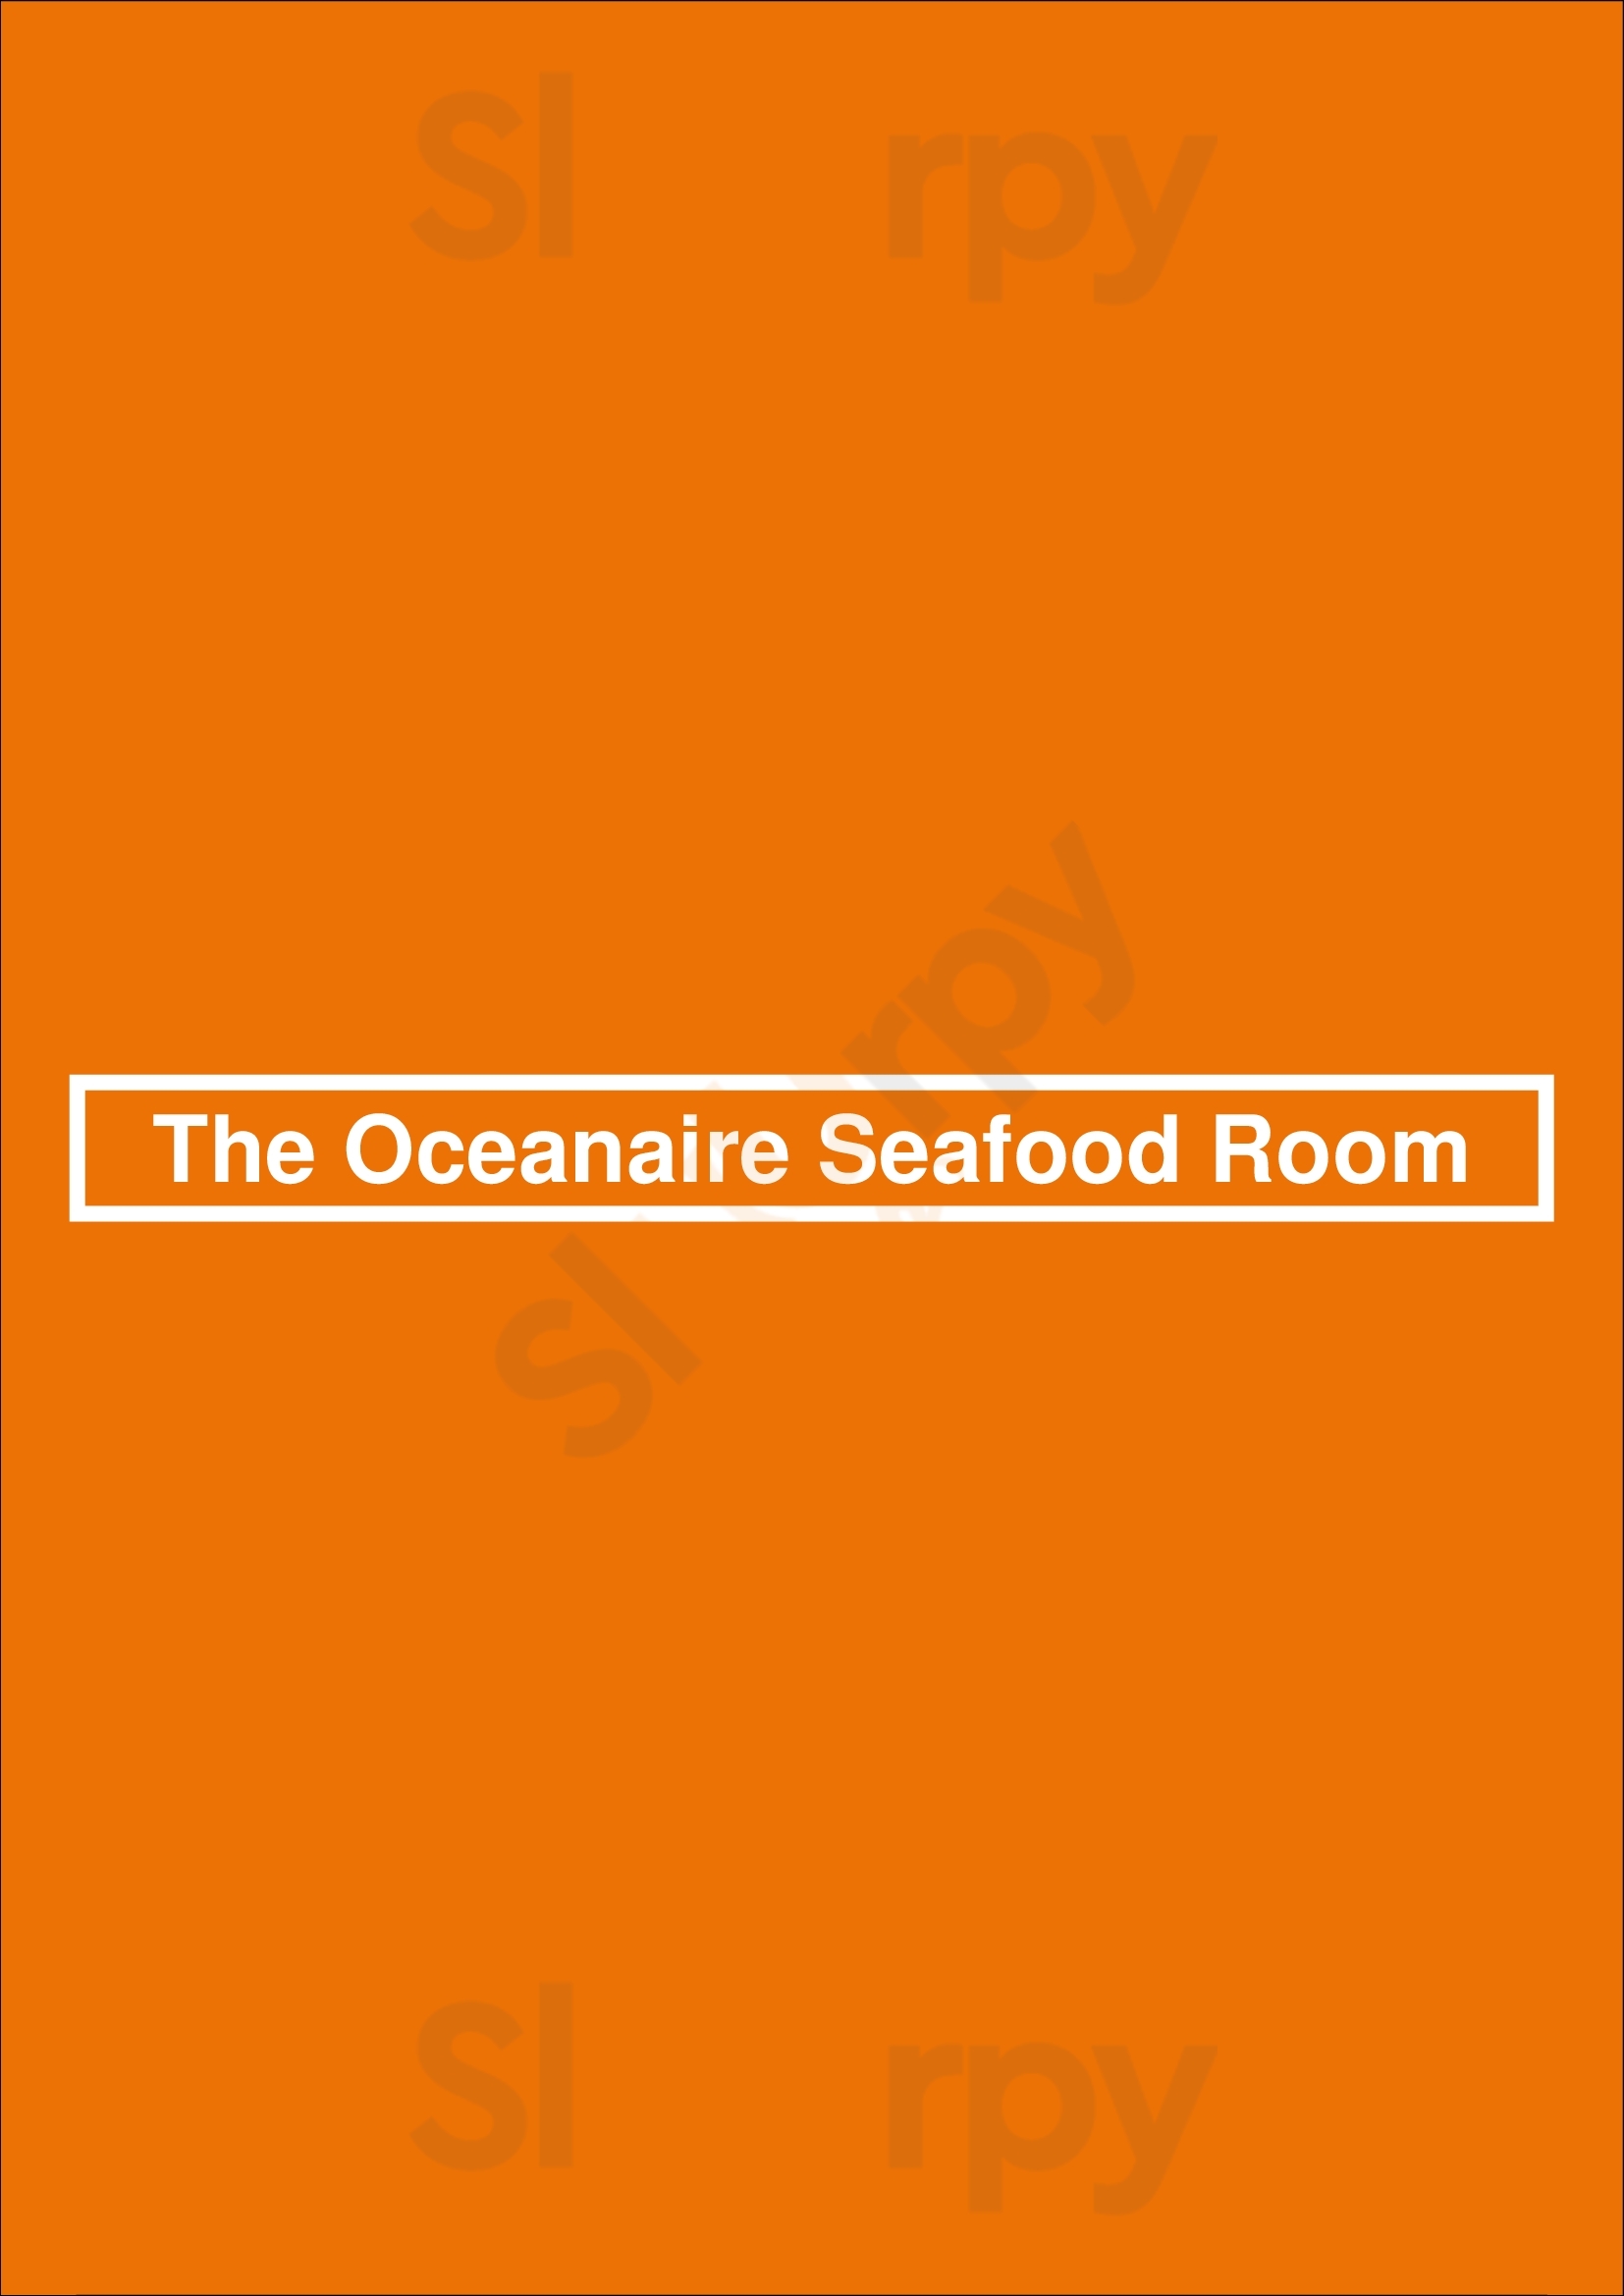 The Oceanaire Seafood Room Orlando Menu - 1